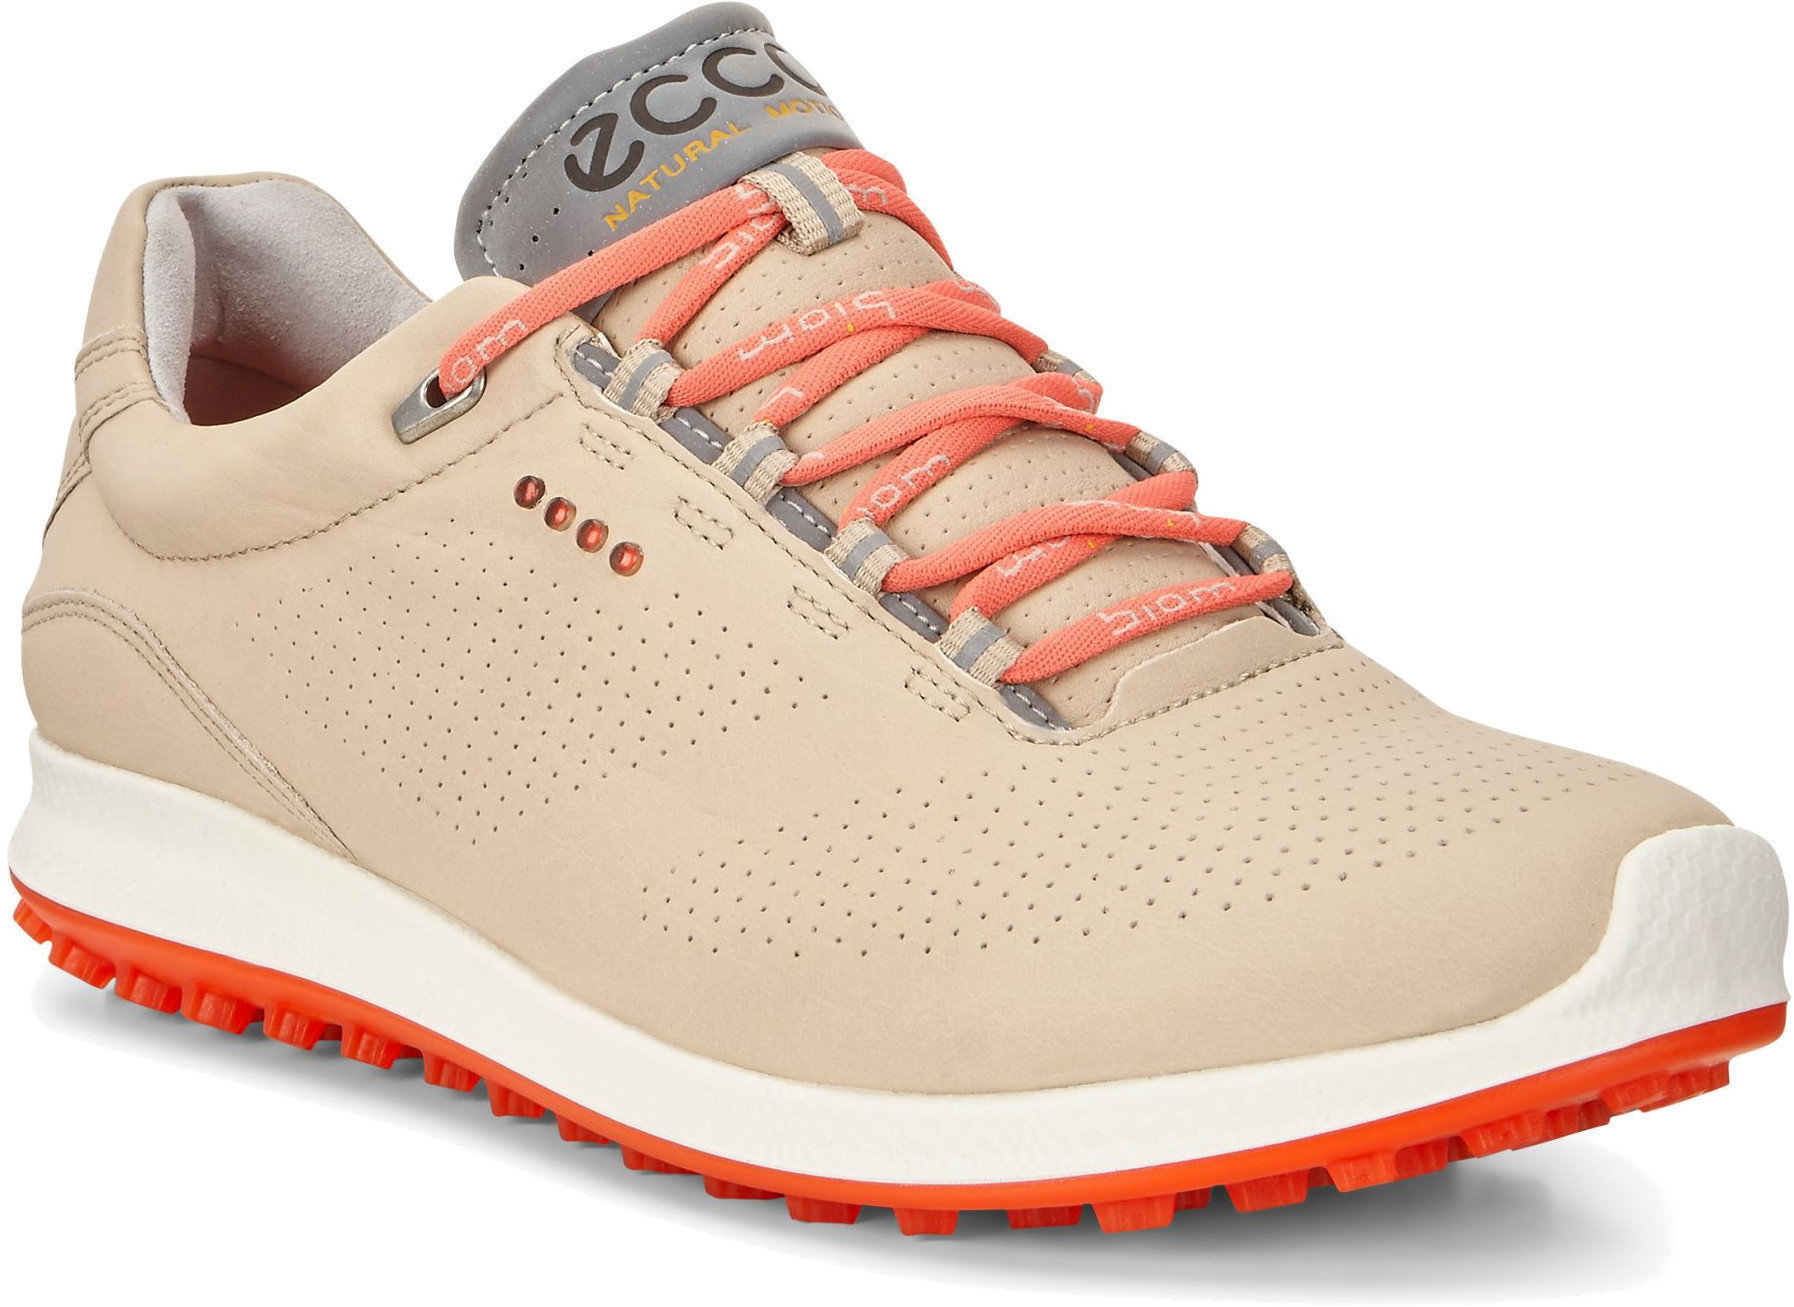 Chaussures de golf pour femmes Ecco Biom Hybrid 2 Chaussures de Golf Femmes Oyester/Coral Blush 41